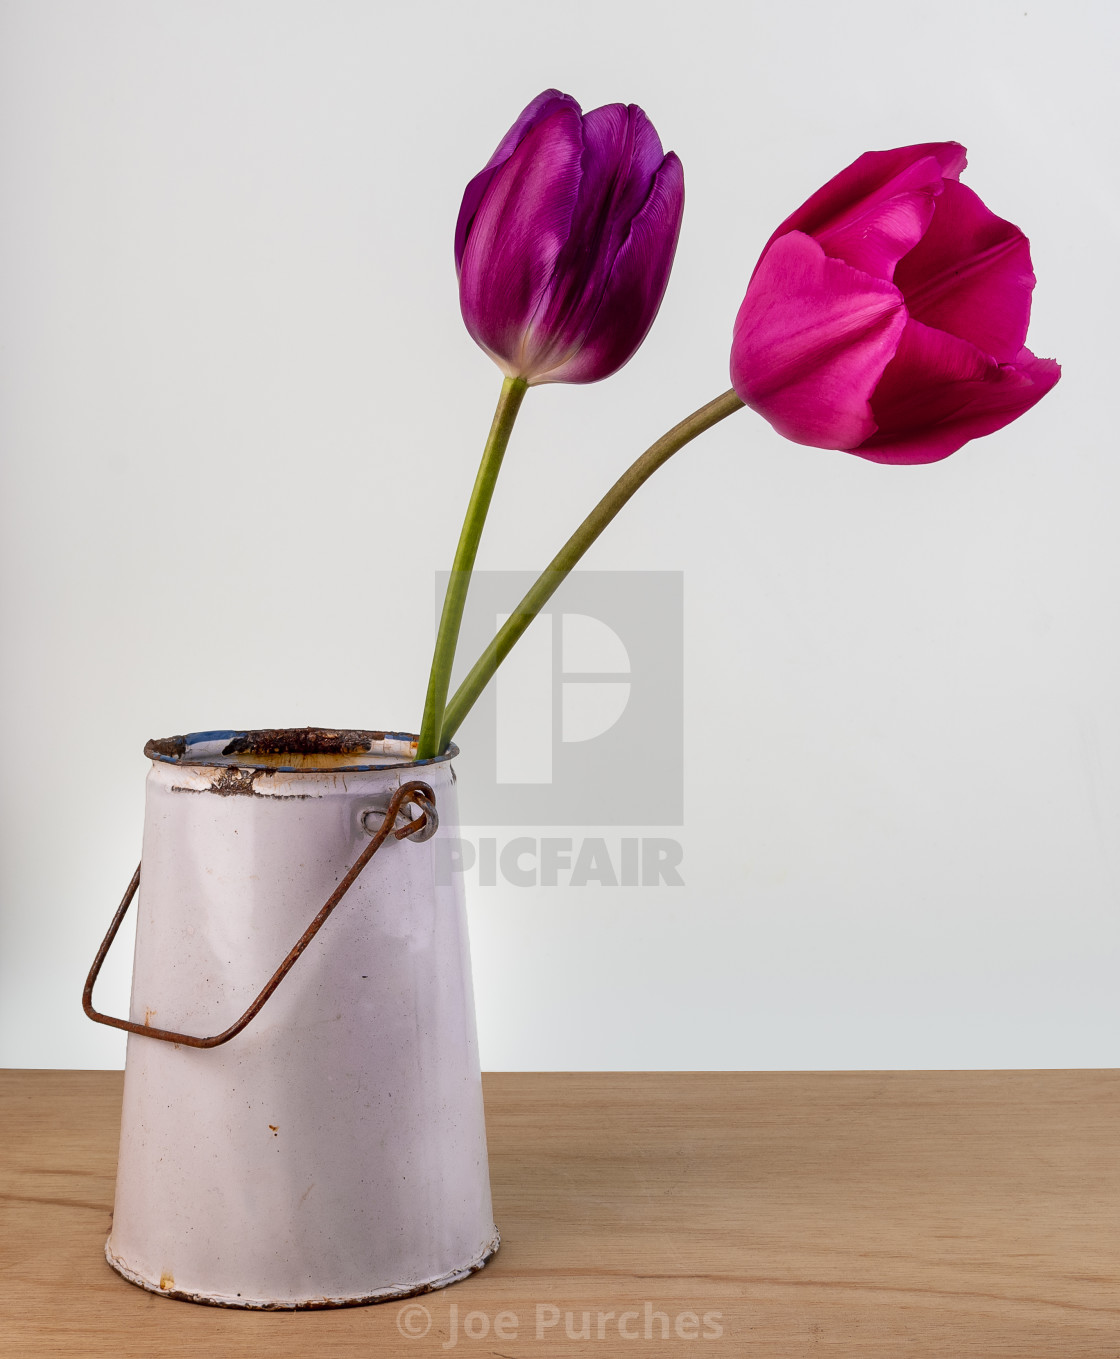 "Tulips and Jug" stock image